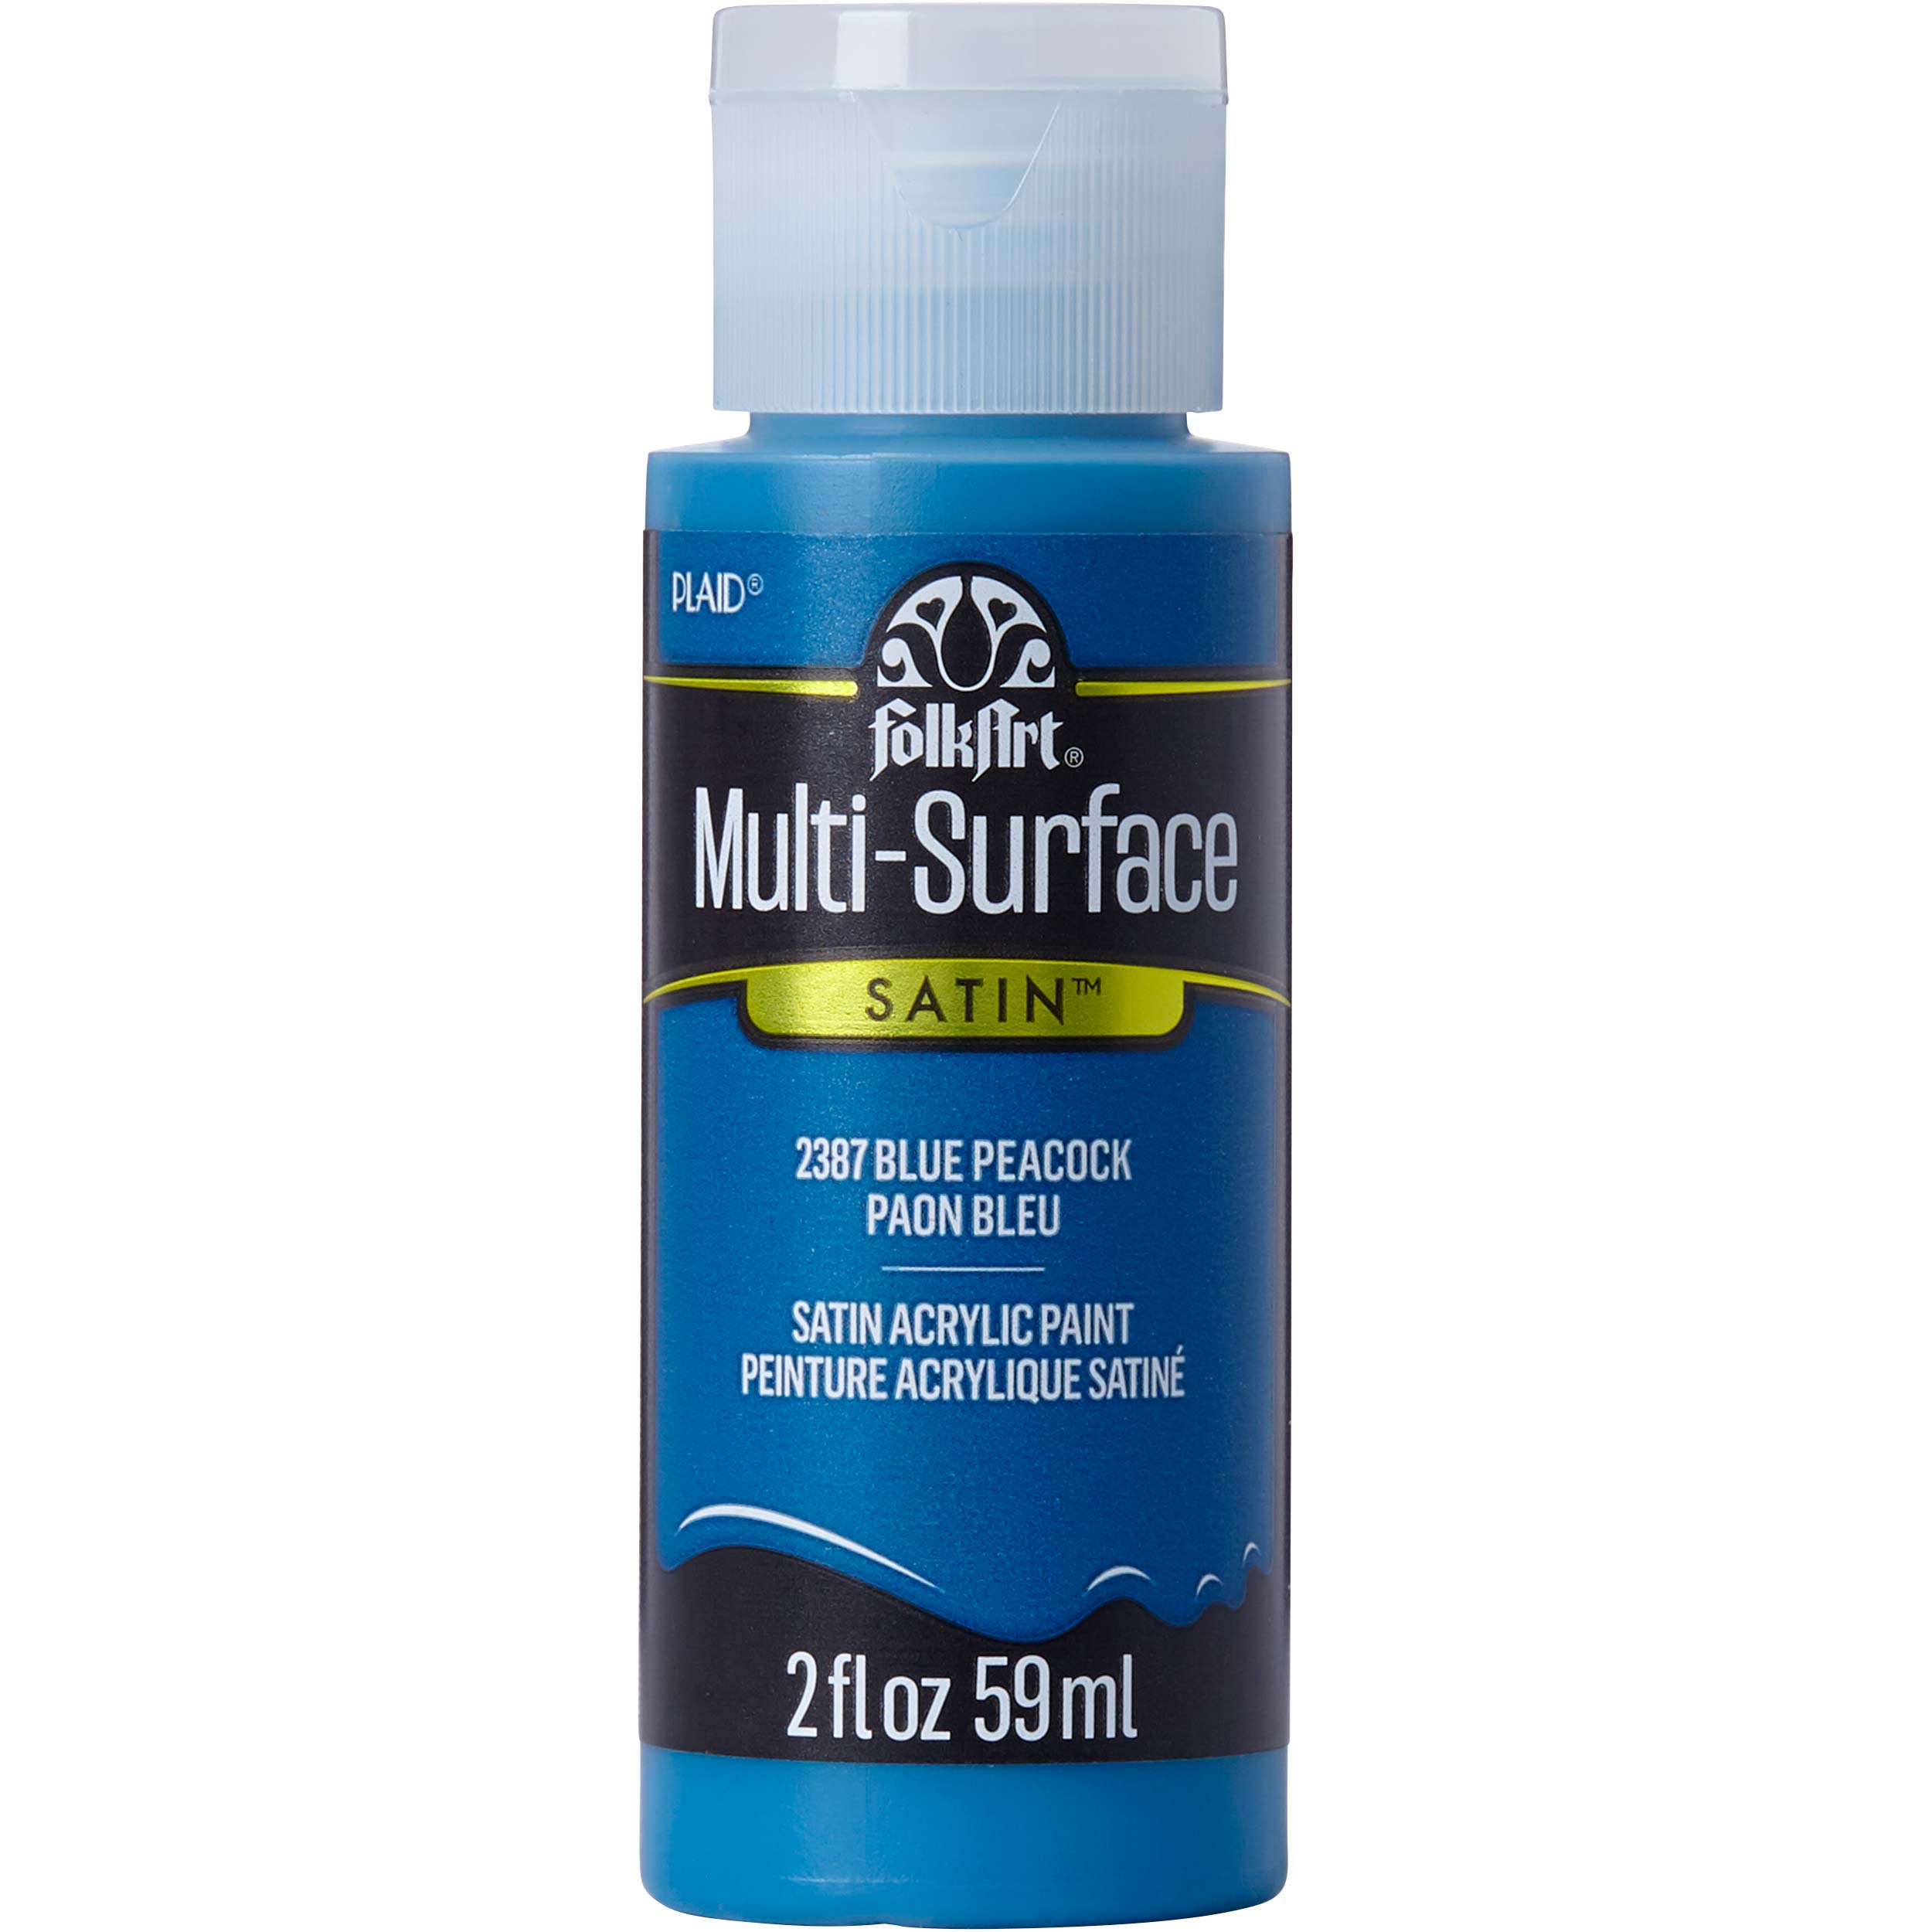 FolkArt ® Multi-Surface Satin Acrylic Paints - Blue Peacock, 2 oz. - 2387